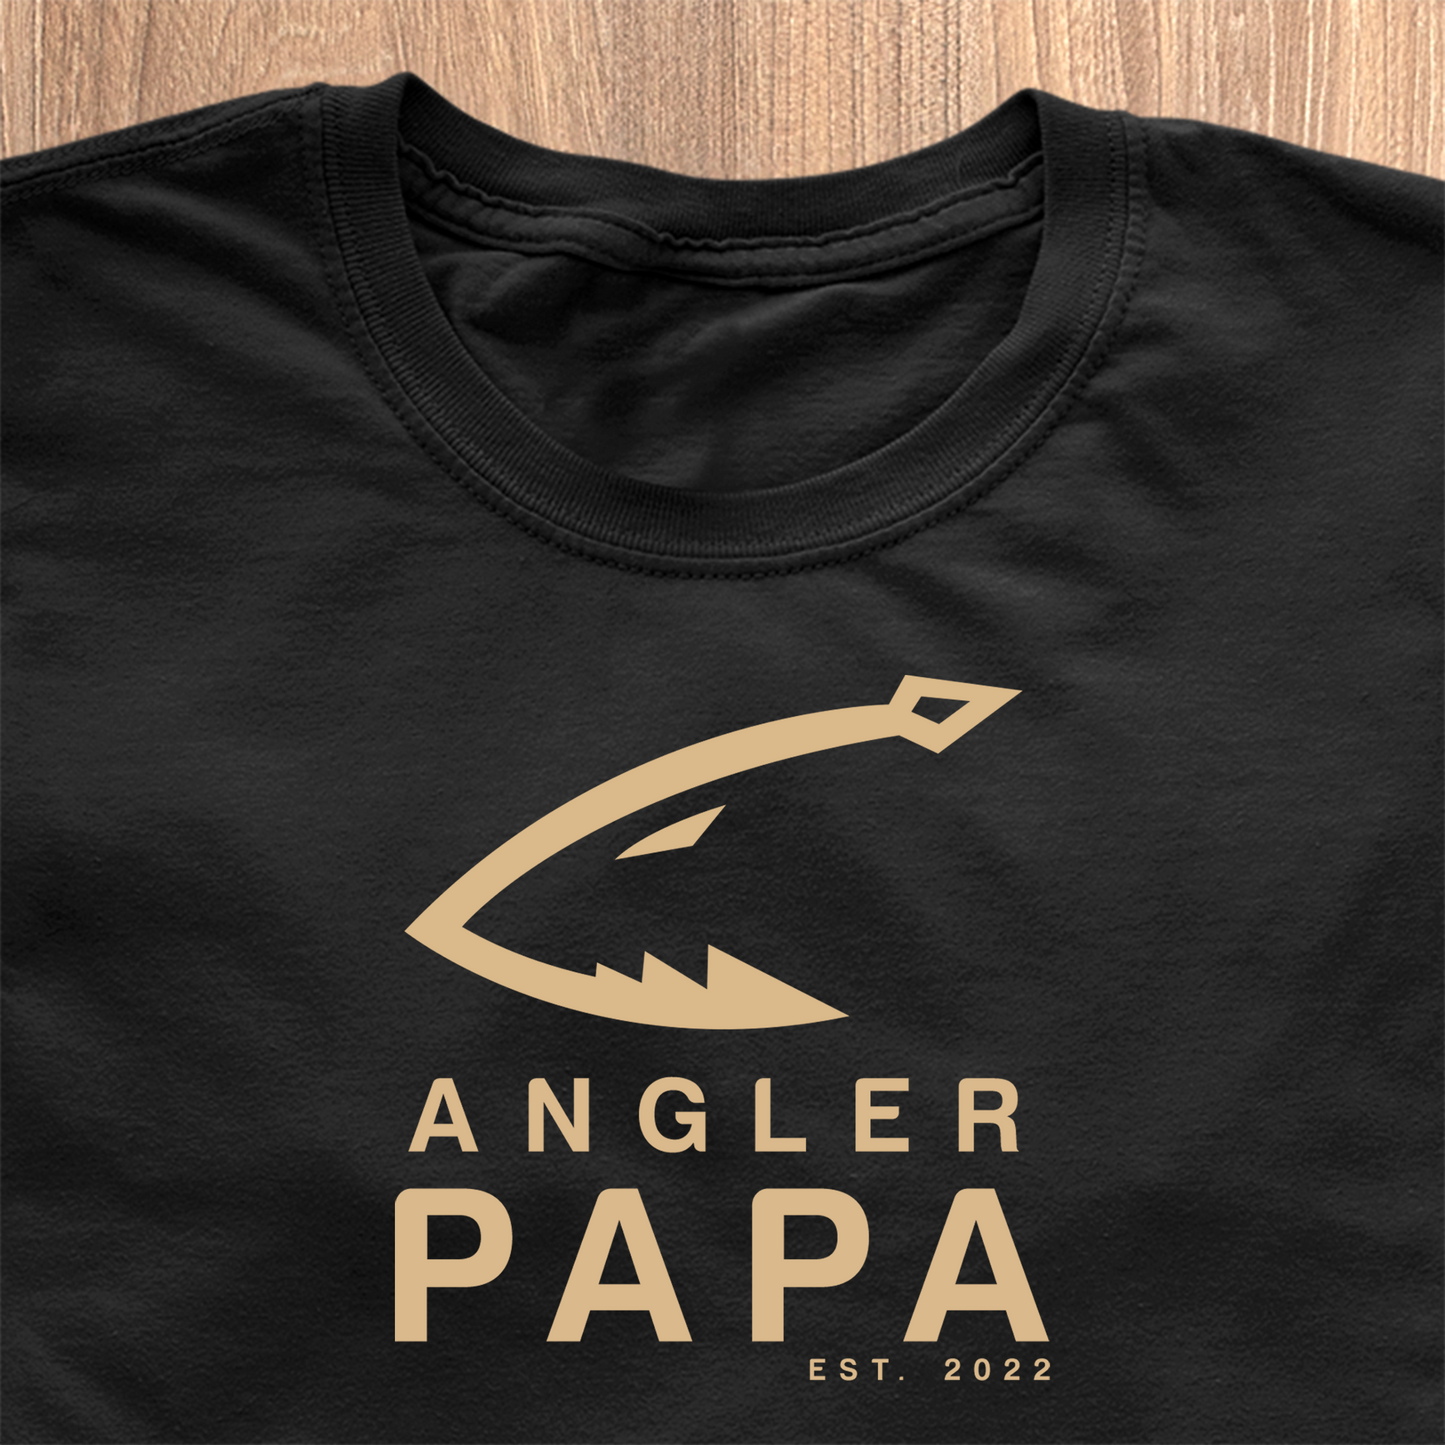 Angler Papa - Premium Shirt